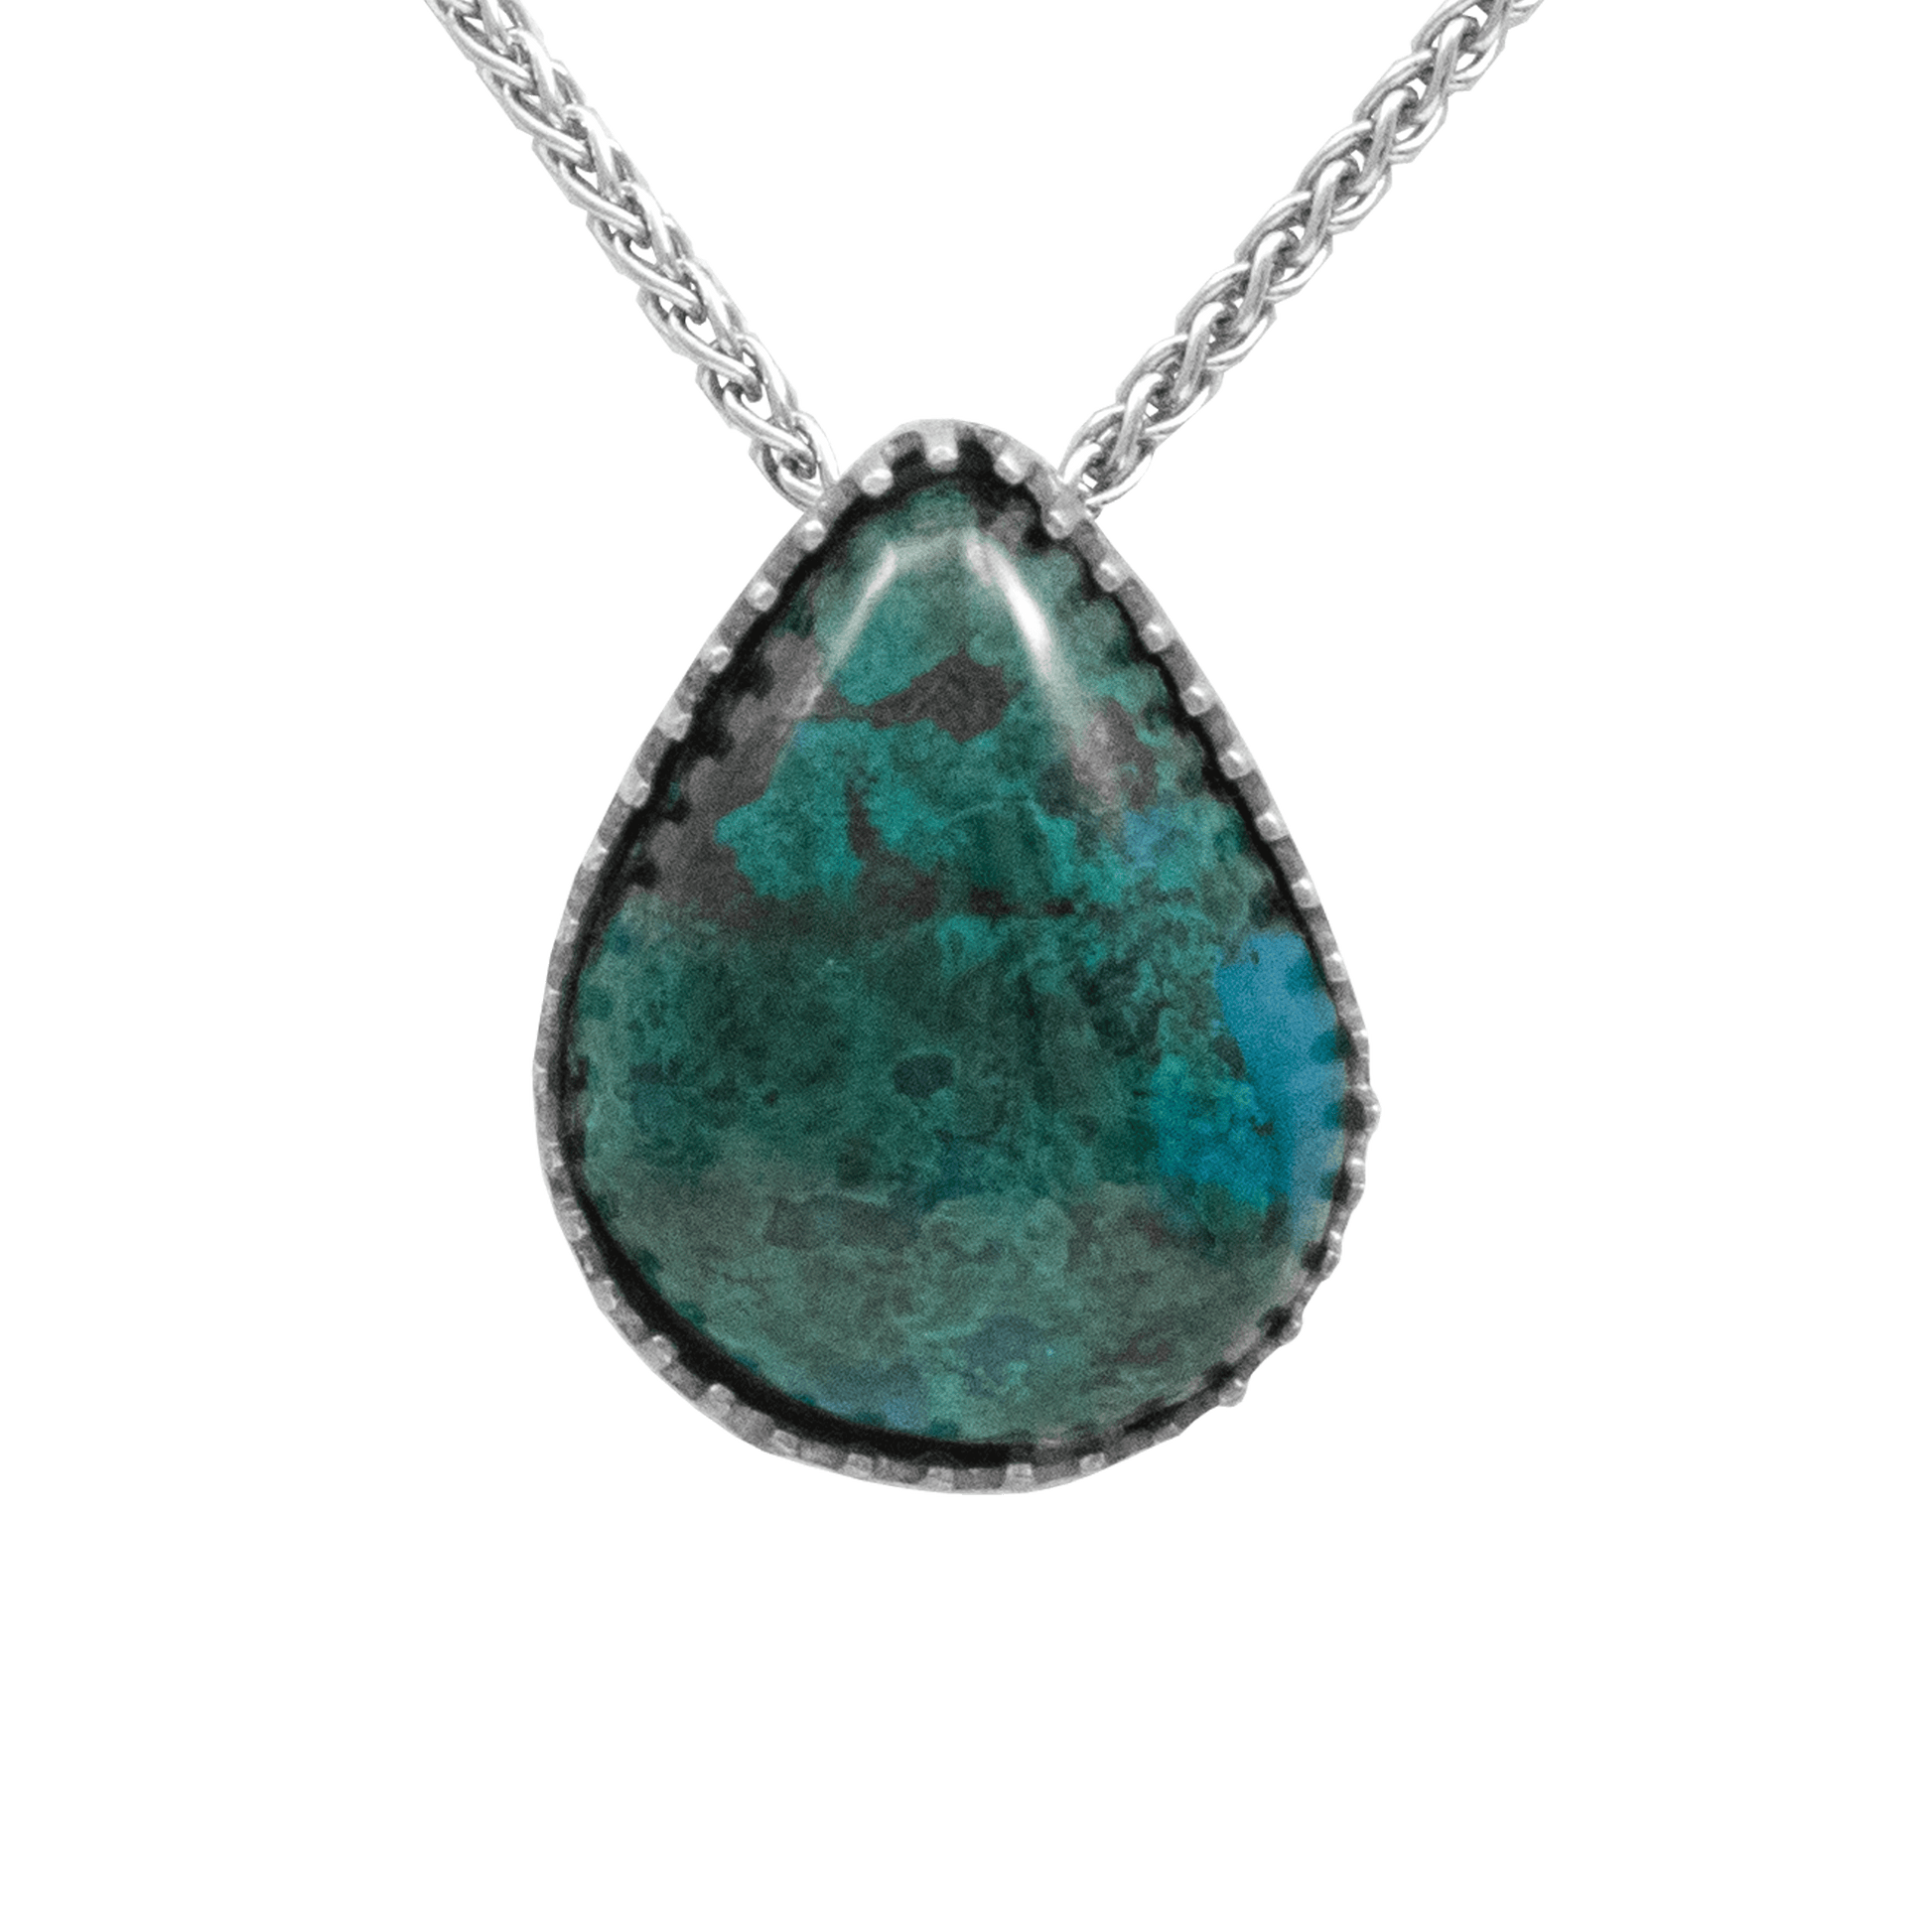 Teardrop Eilat Stone Necklace on sterling silver chain